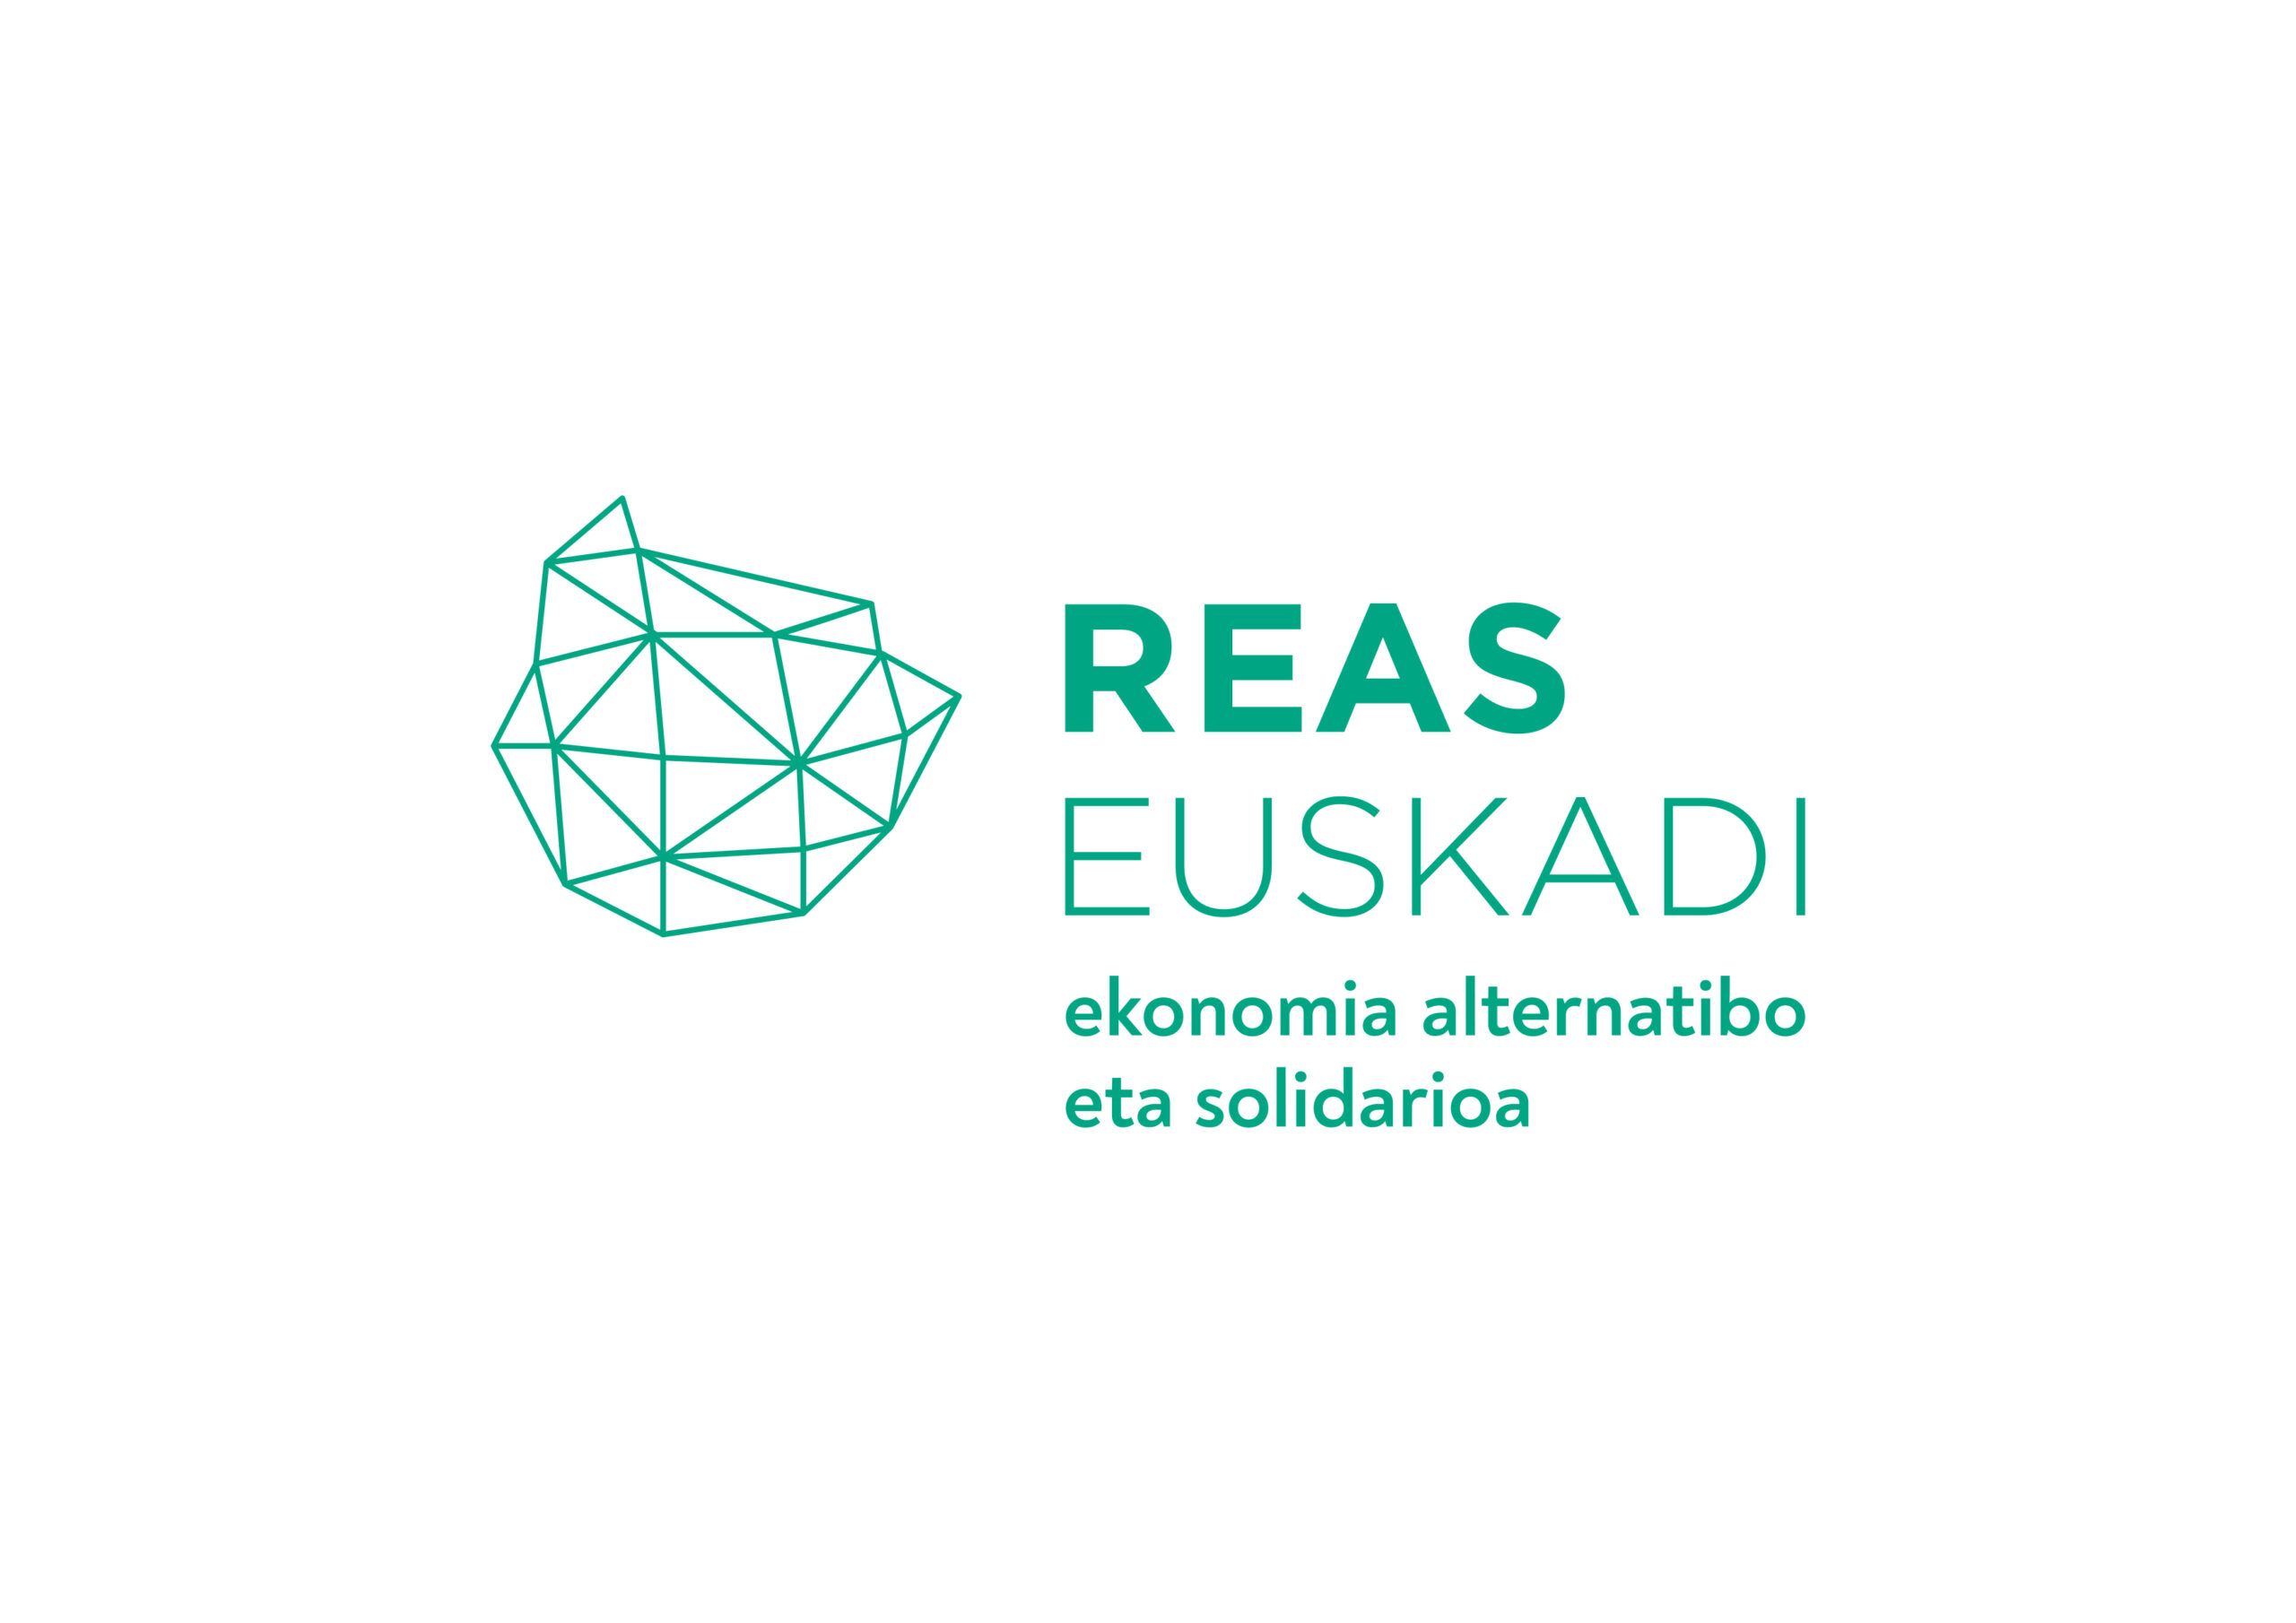 REAS Euskadi (falta imagen)